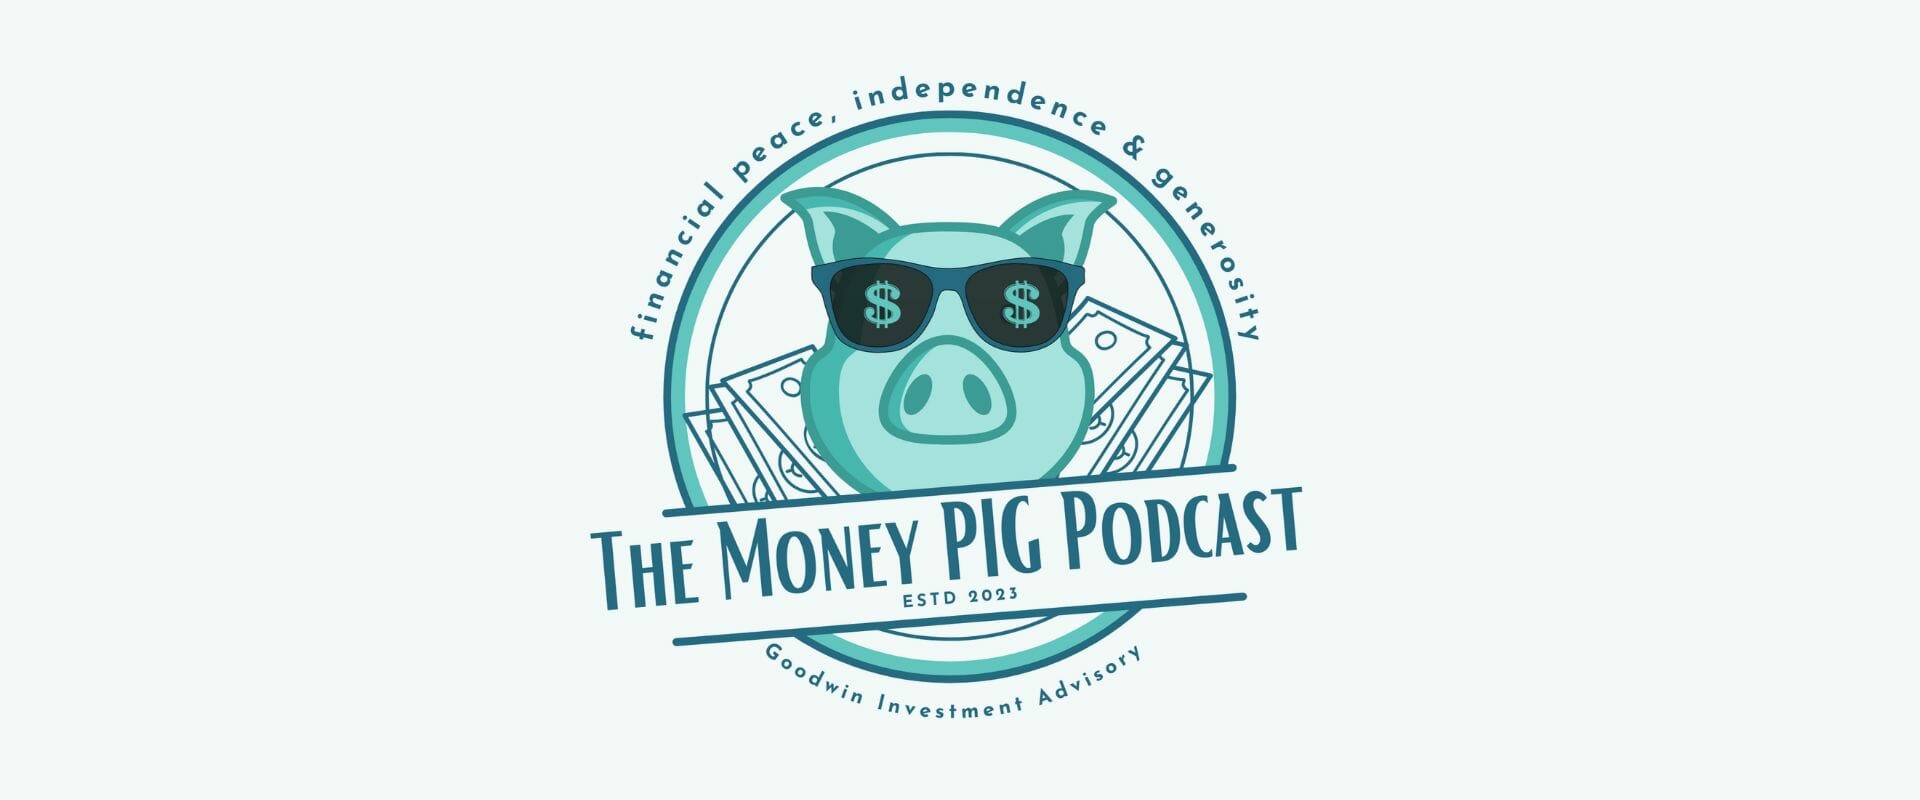 The Money P.I.G. Podcast